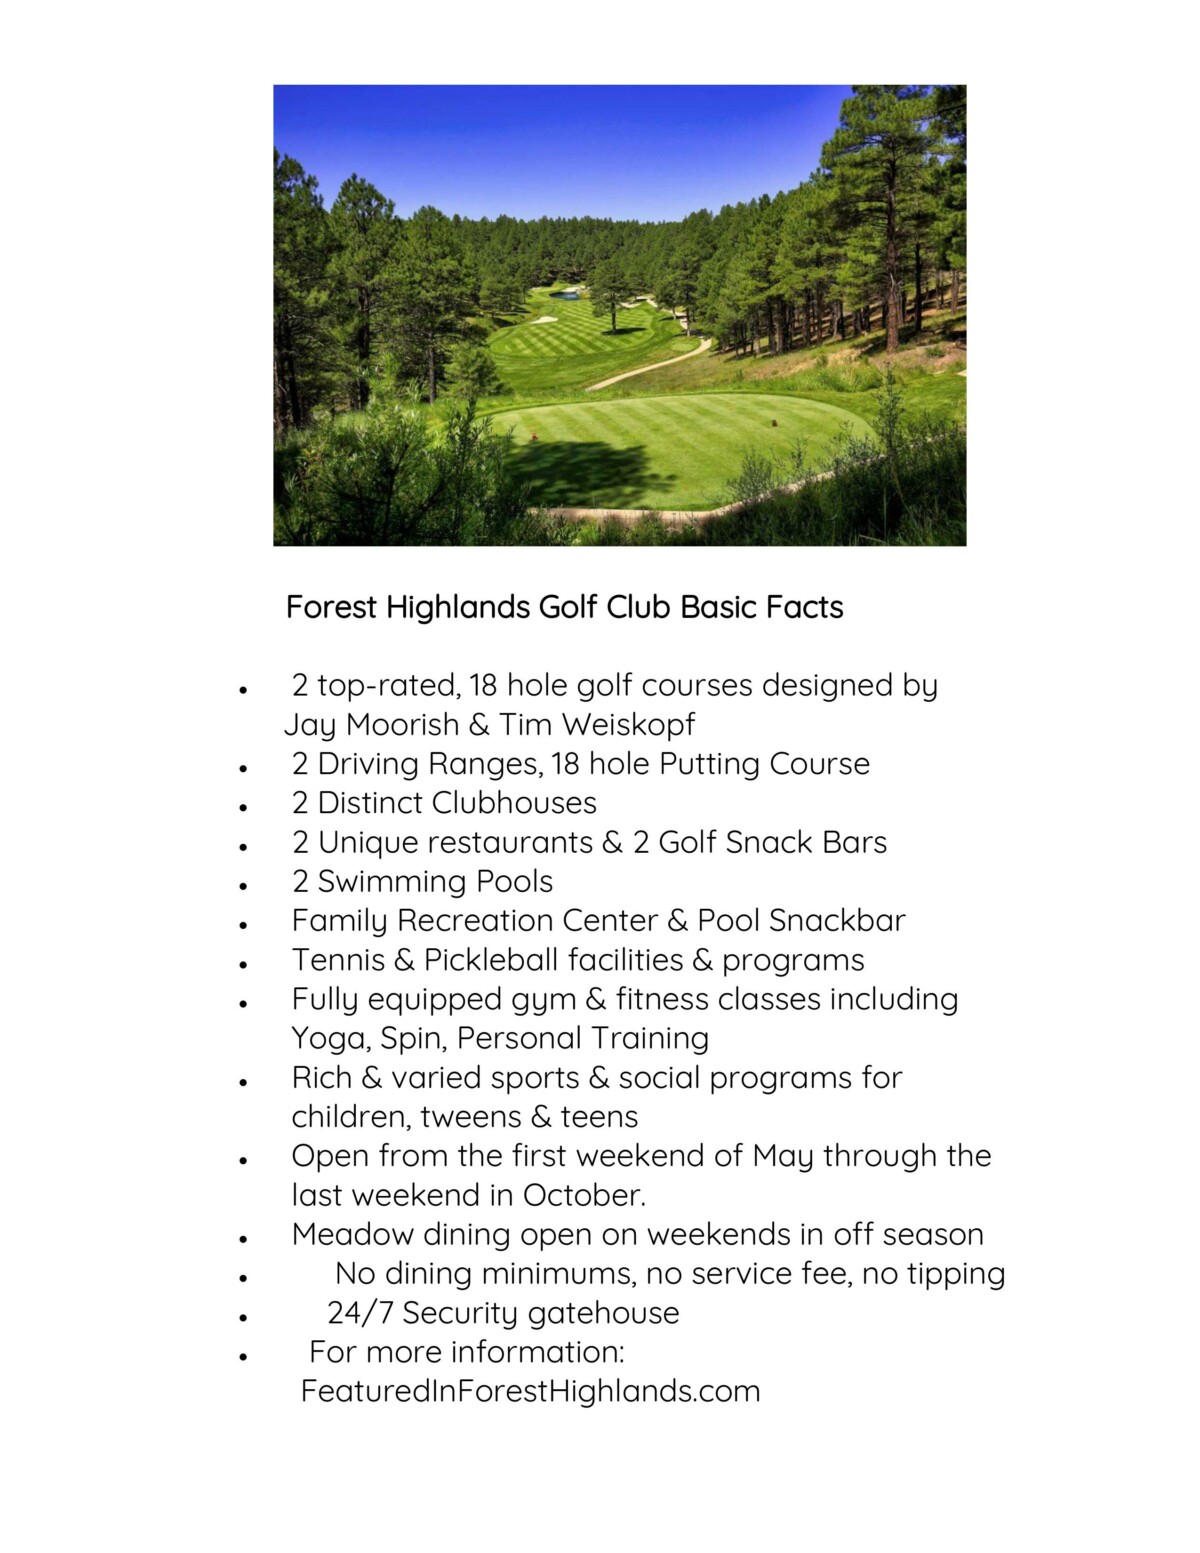 Forest Highlands Facts.jpg